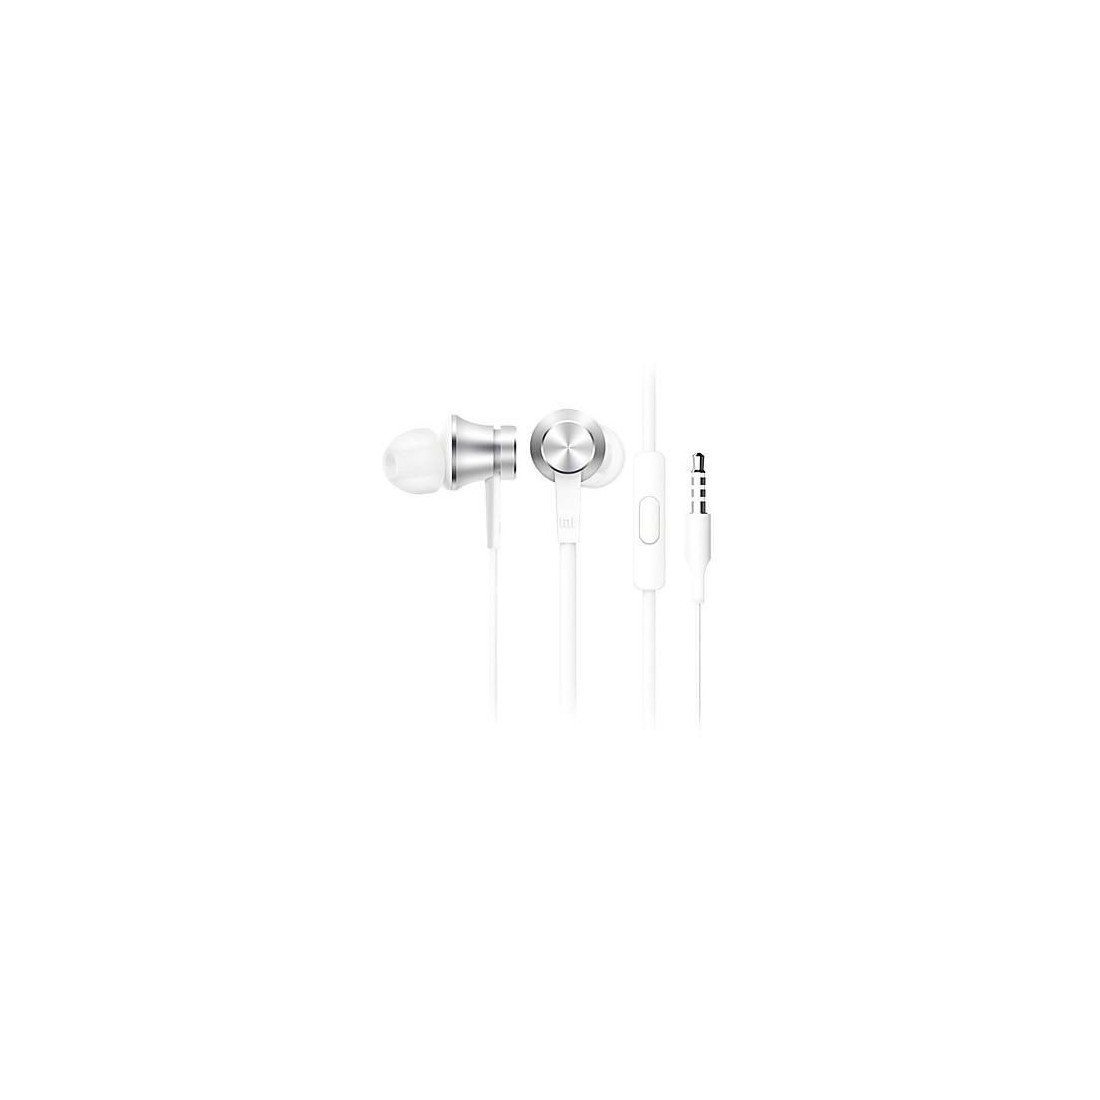 Xiaomi Piston Basic Edition Earphones, Metal Body, 3.5mm Jack - Silver